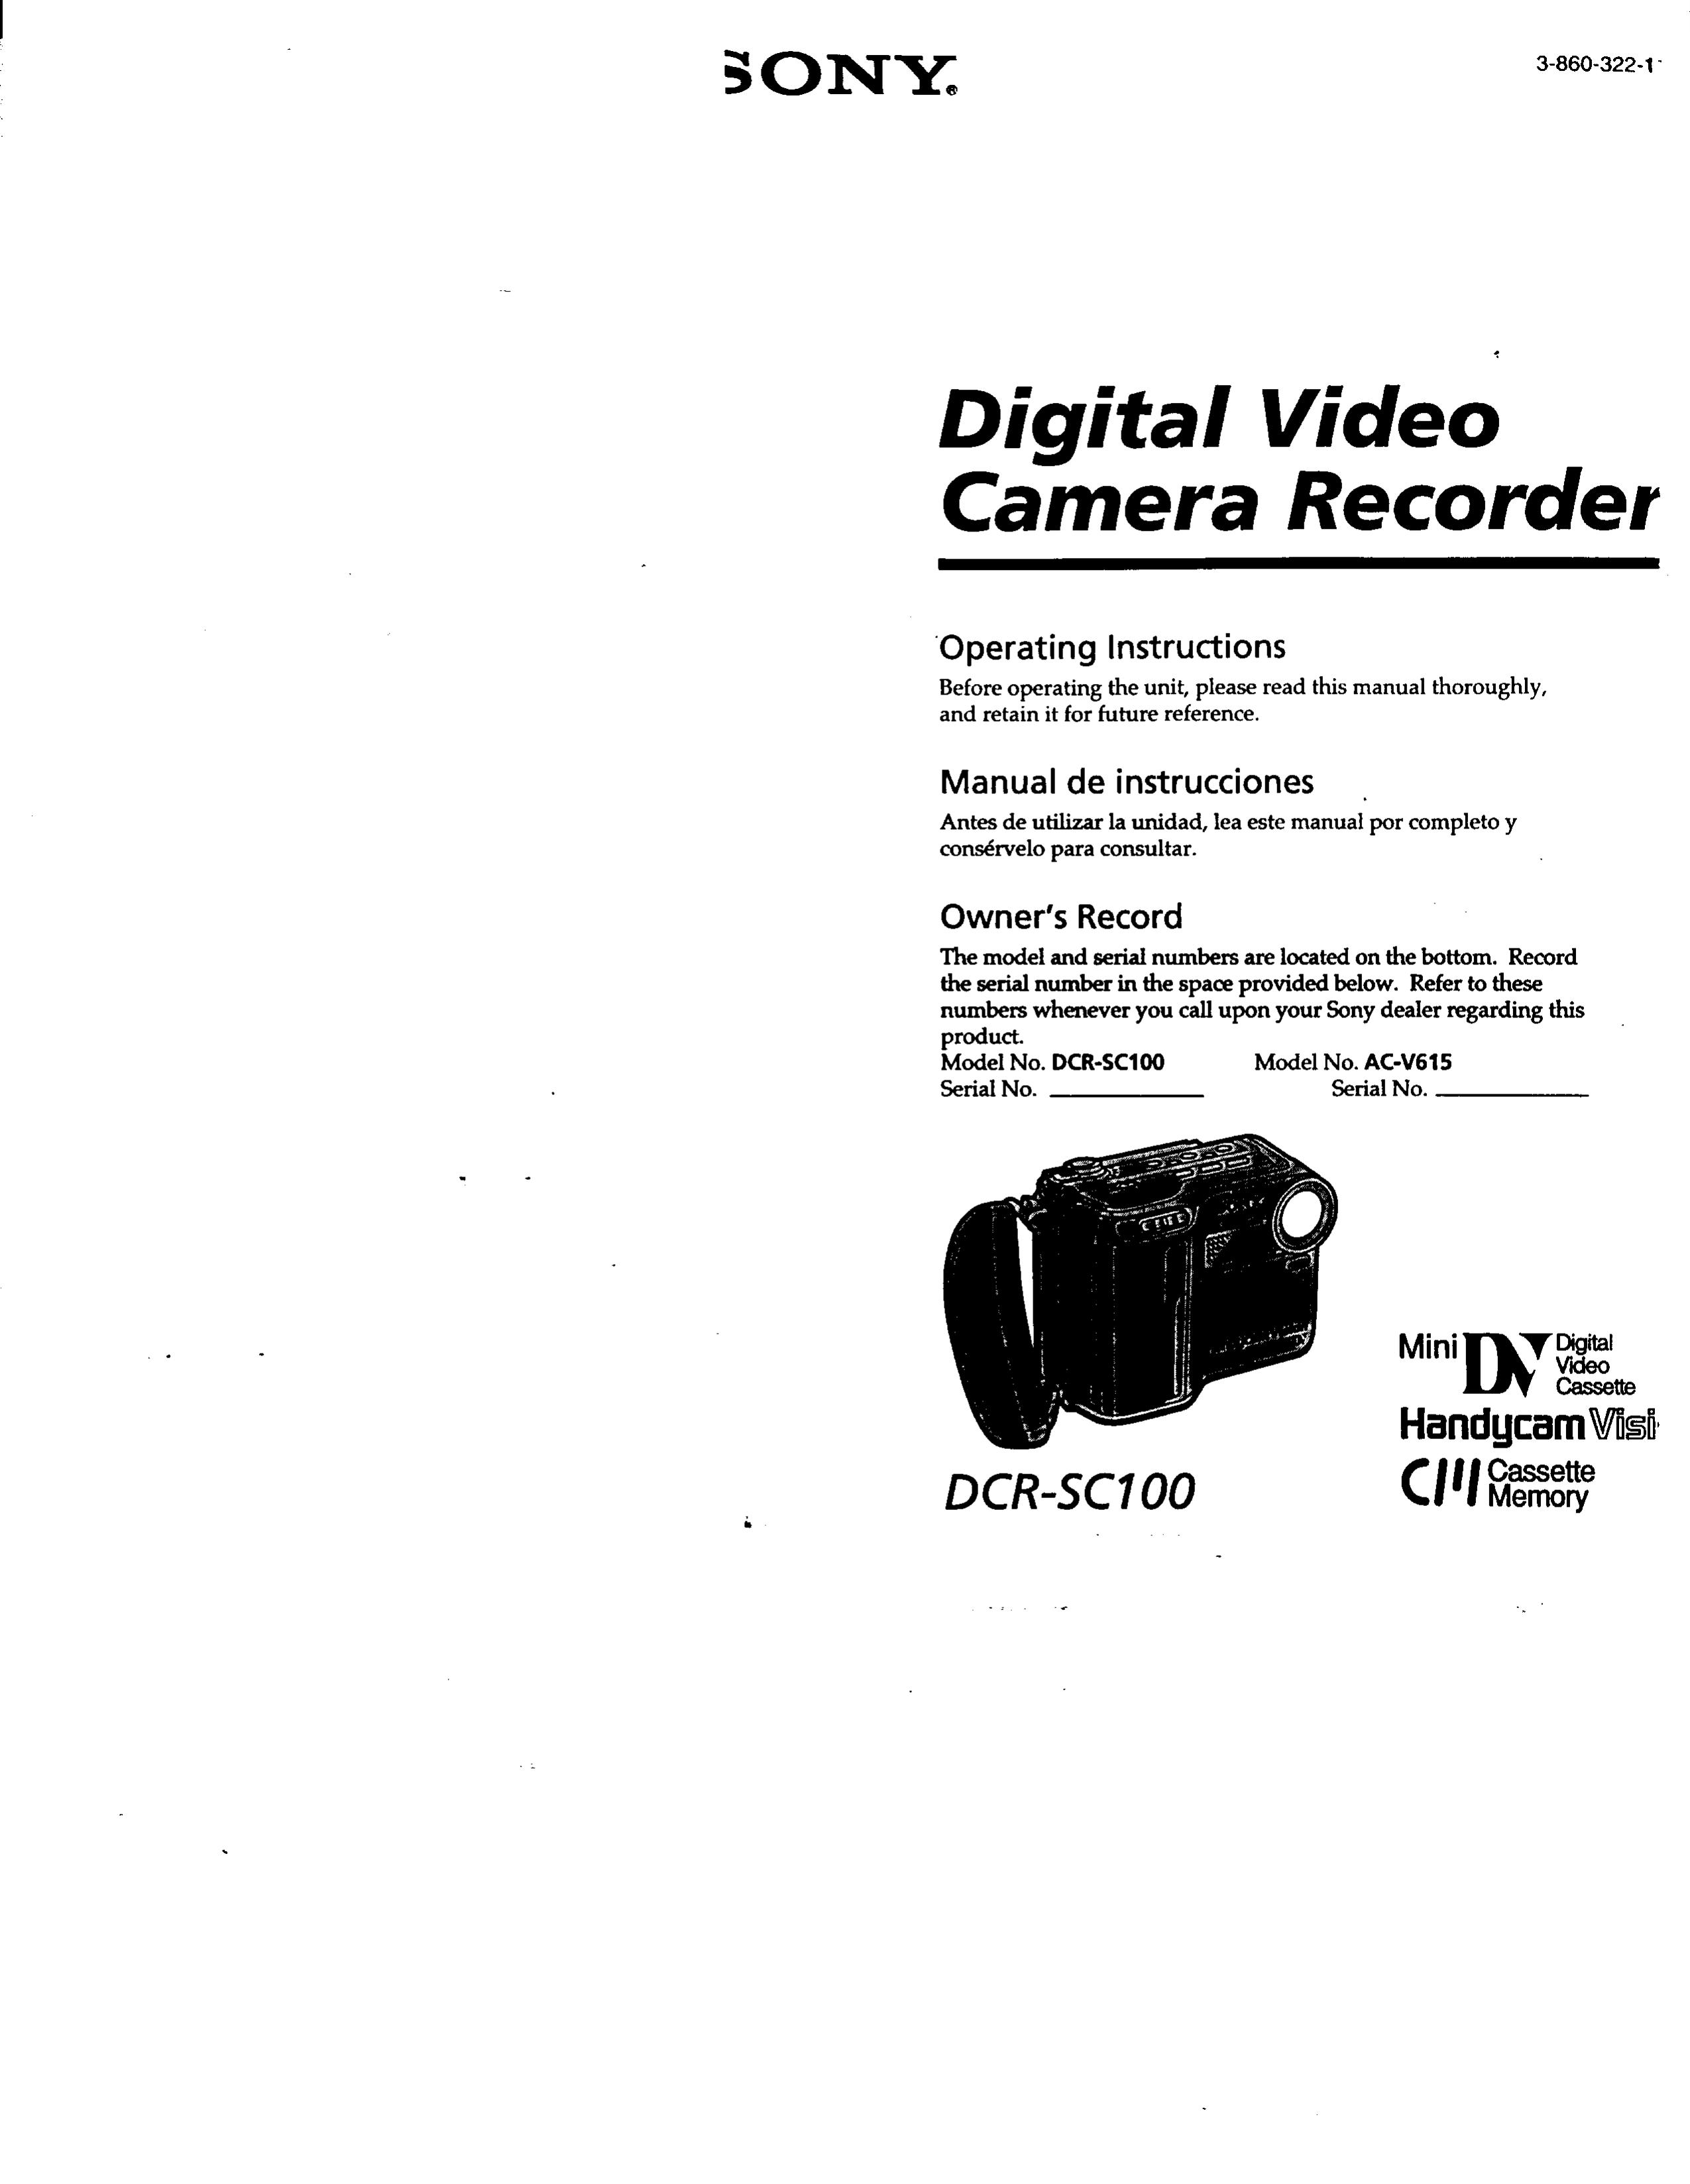 Sony AC-V615 Camera Accessories User Manual